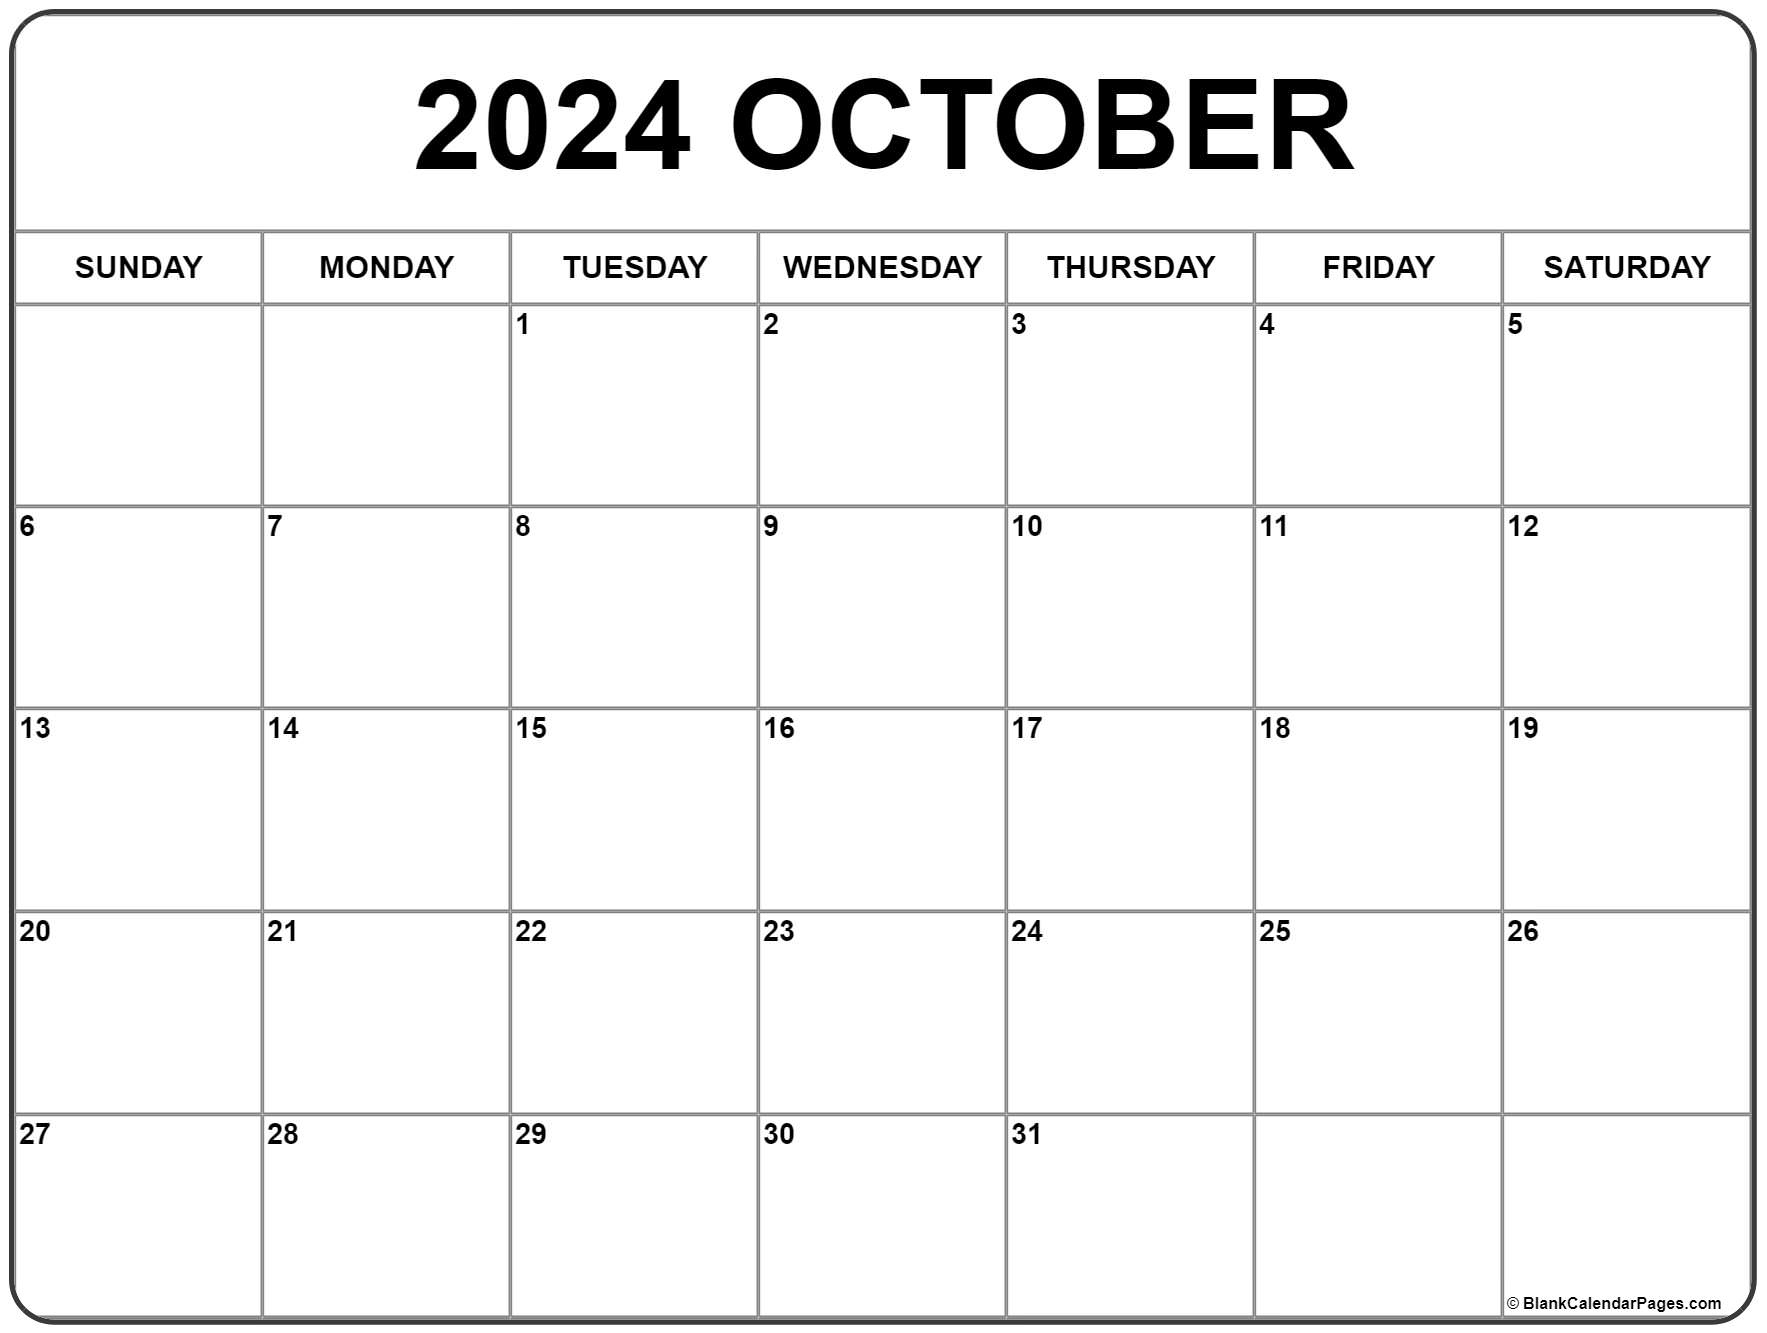 October 2024 Calendar | Free Printable Calendar for Free Printable Calendar 2024 October November December